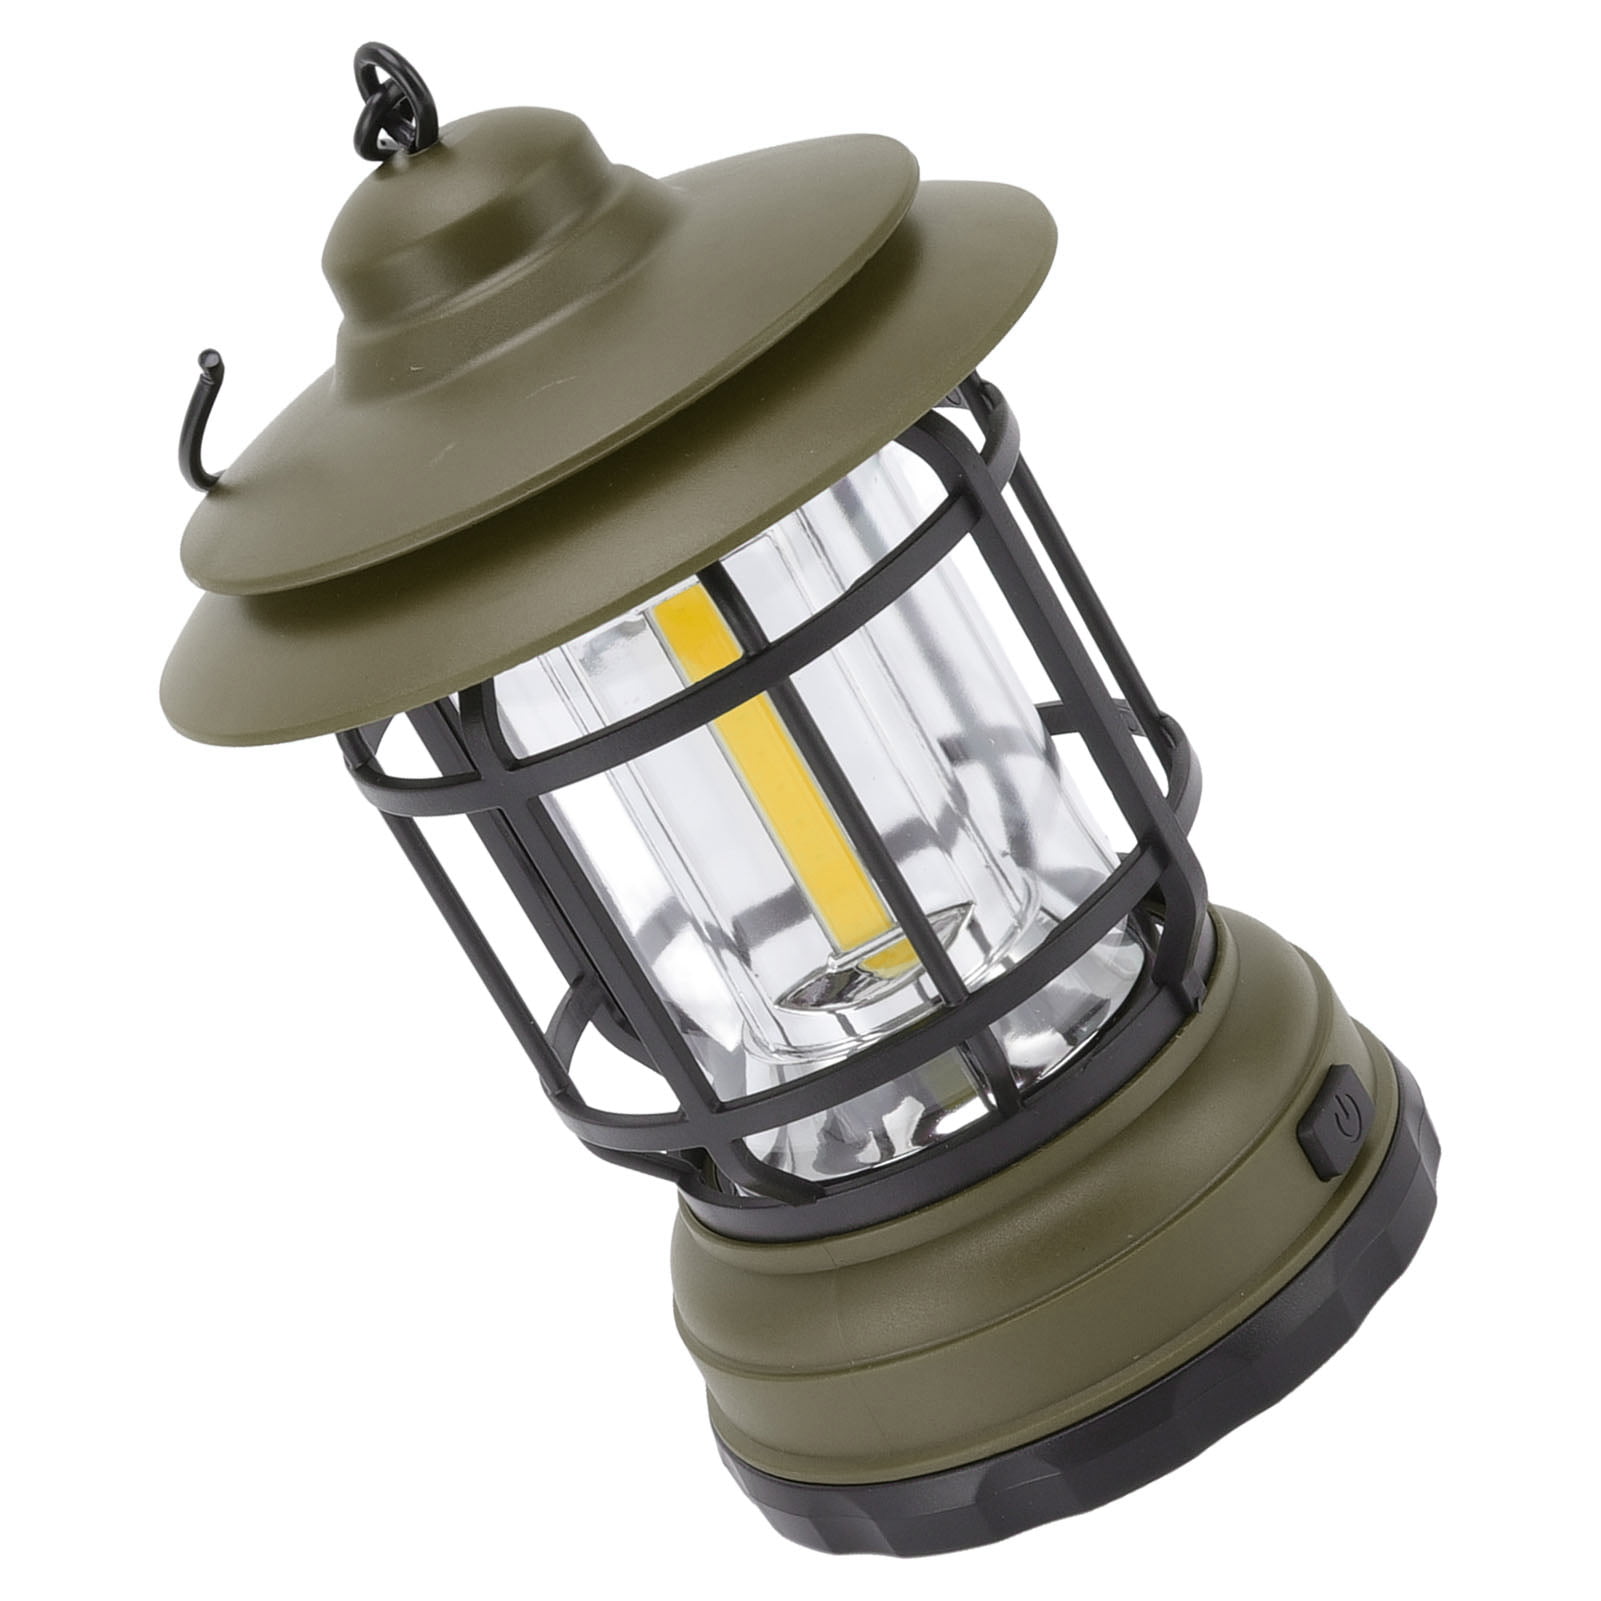 Lotpreco Lanterns Battery Powered LED Portable Camp Tent Lamp